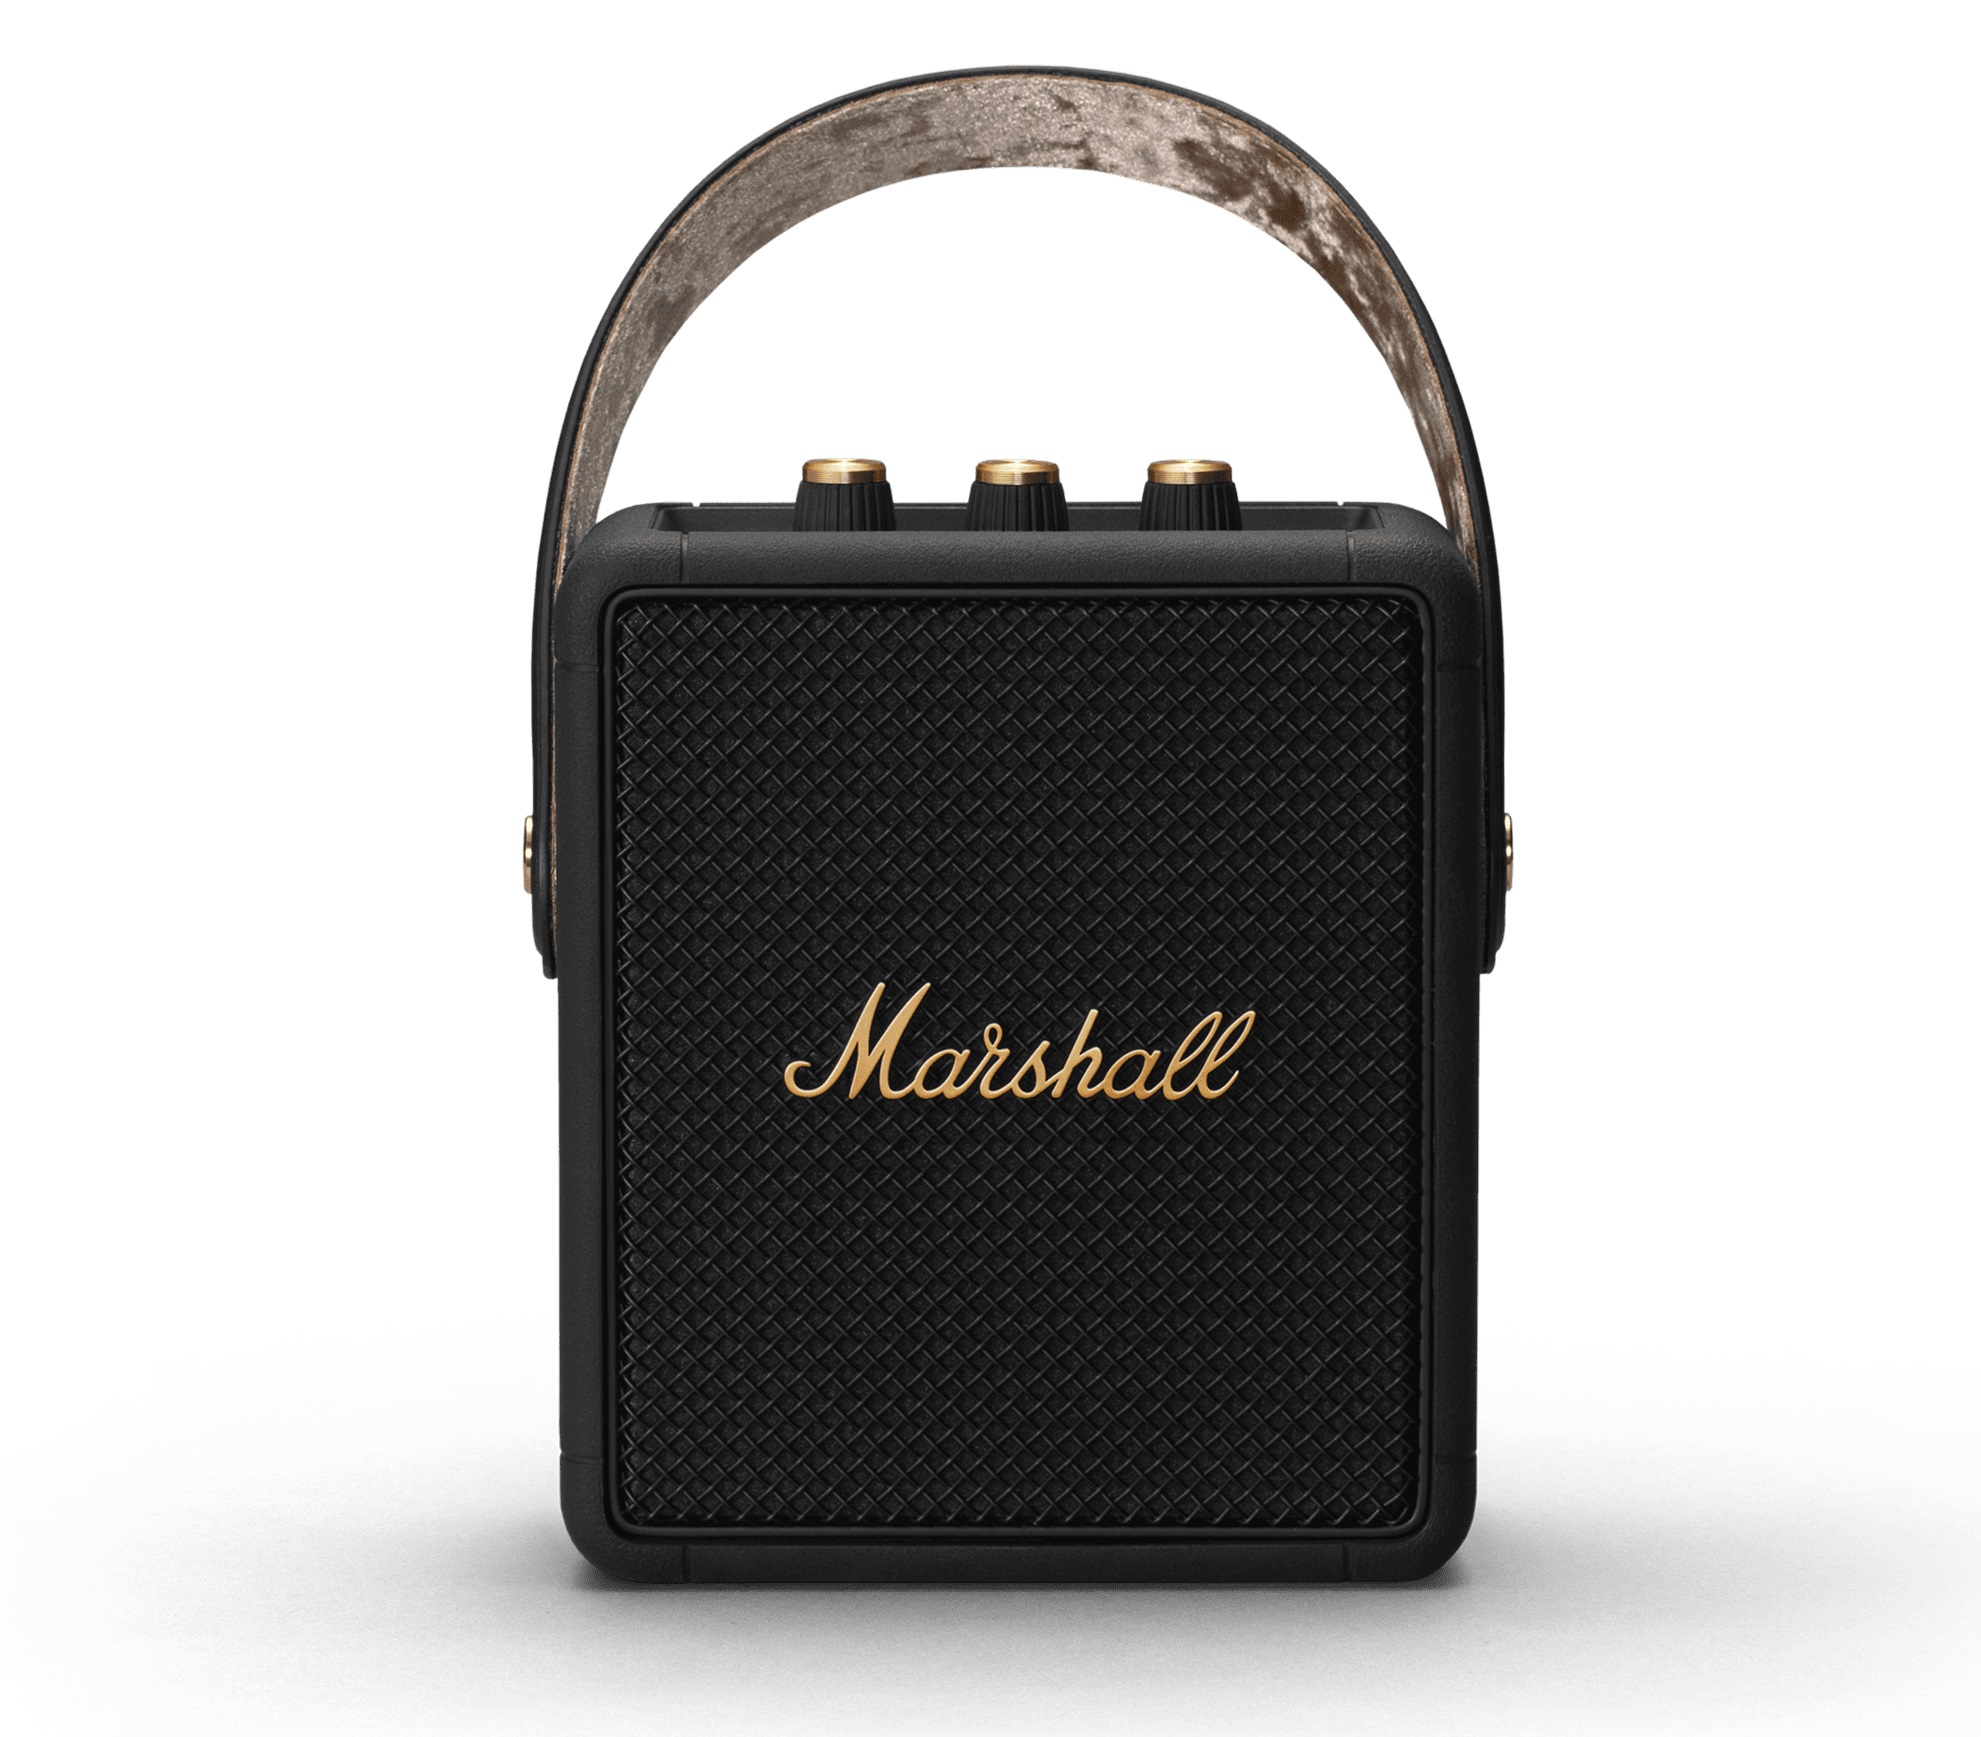 Портативная акустика MARSHALL Stockwell II black brass портативная колонка marshall emberton ii кремовая